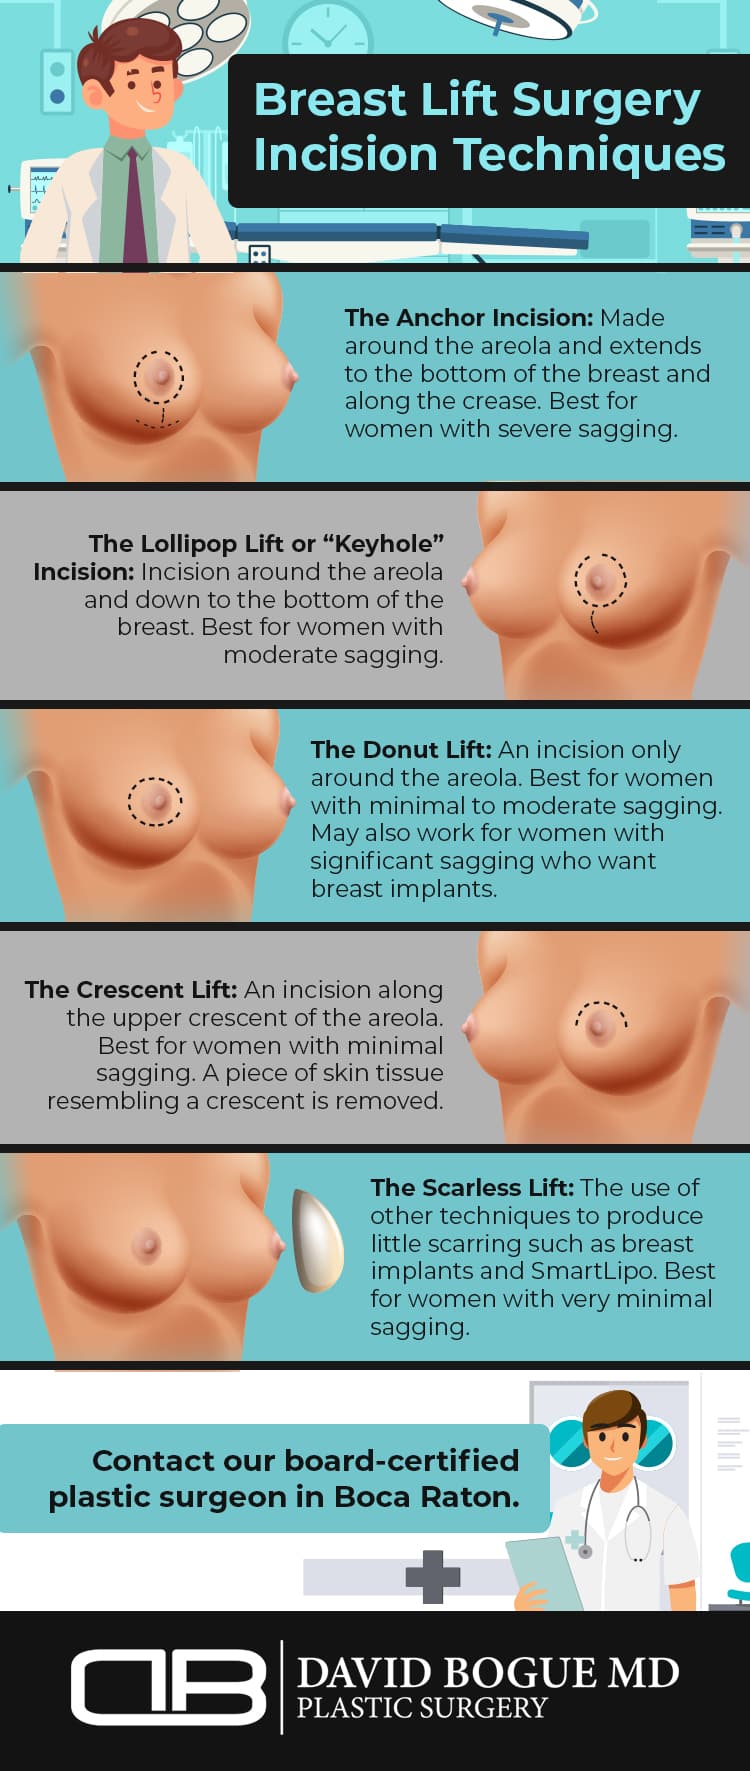 bogue Breast lift surgery incision techniques rev 2 (1)